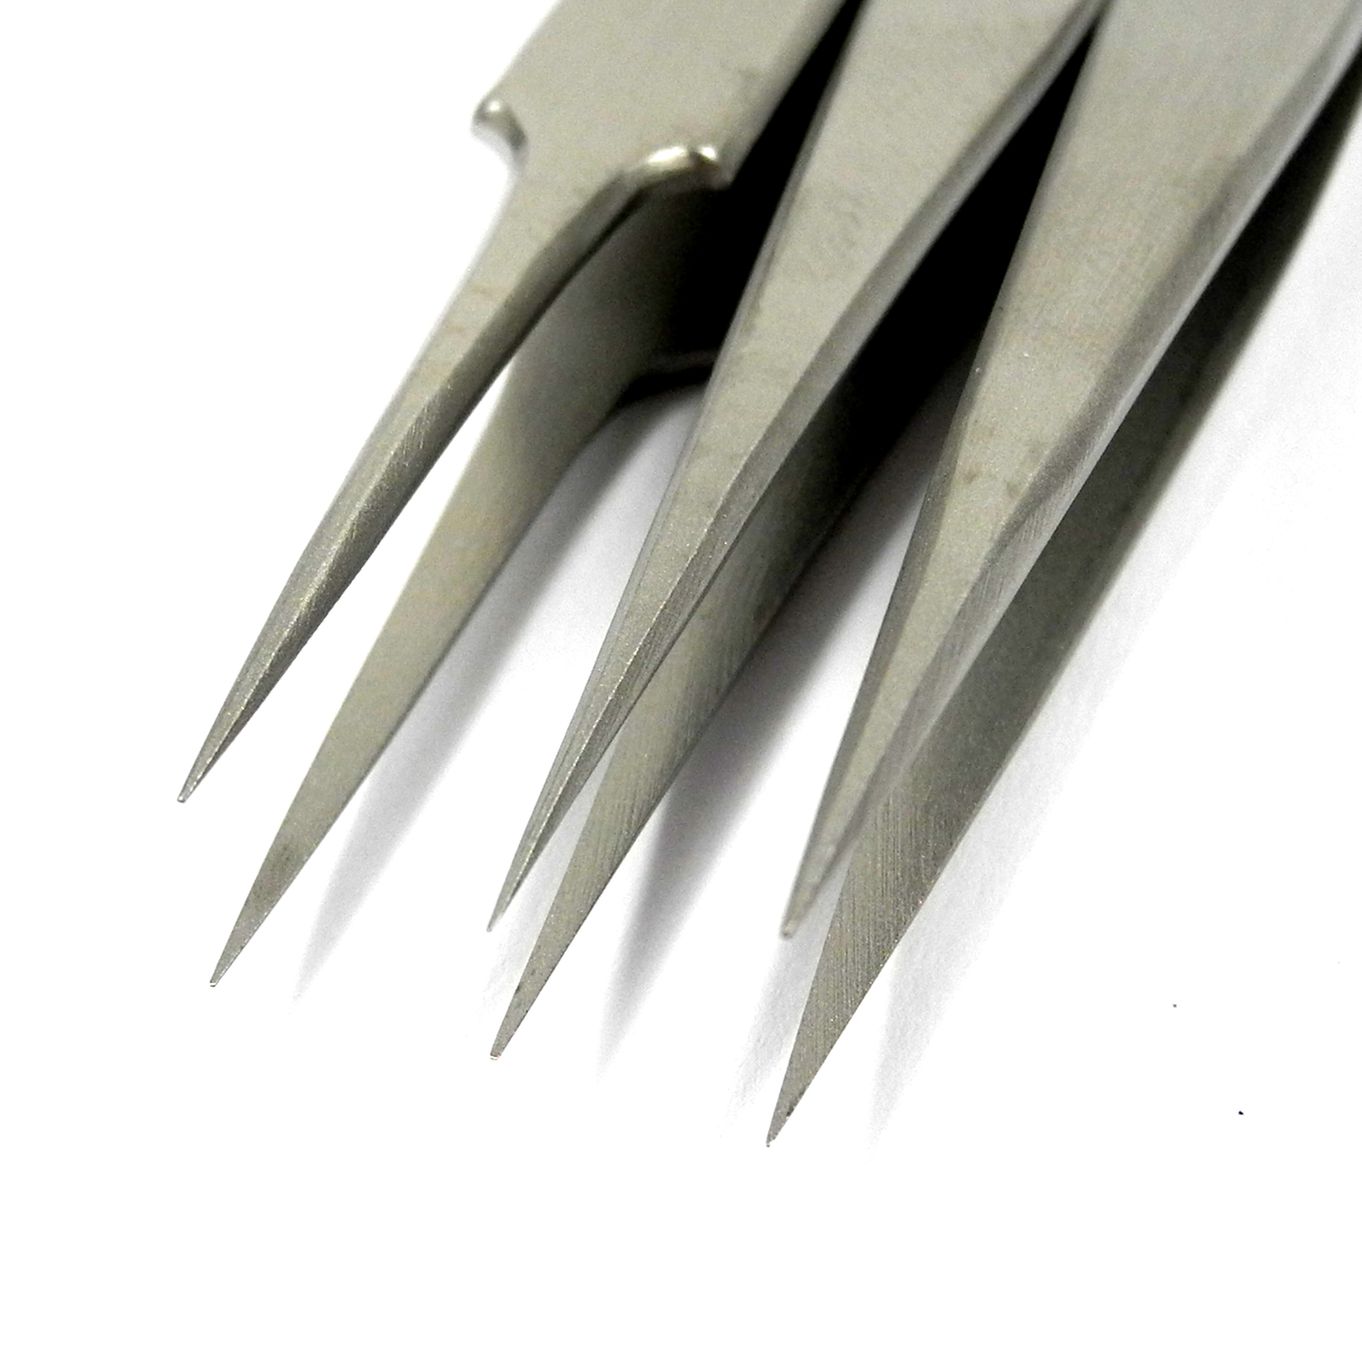 Bergeon 7027-XLR Stainless Steel Diamond Locking Tweezers Extra Large Tips